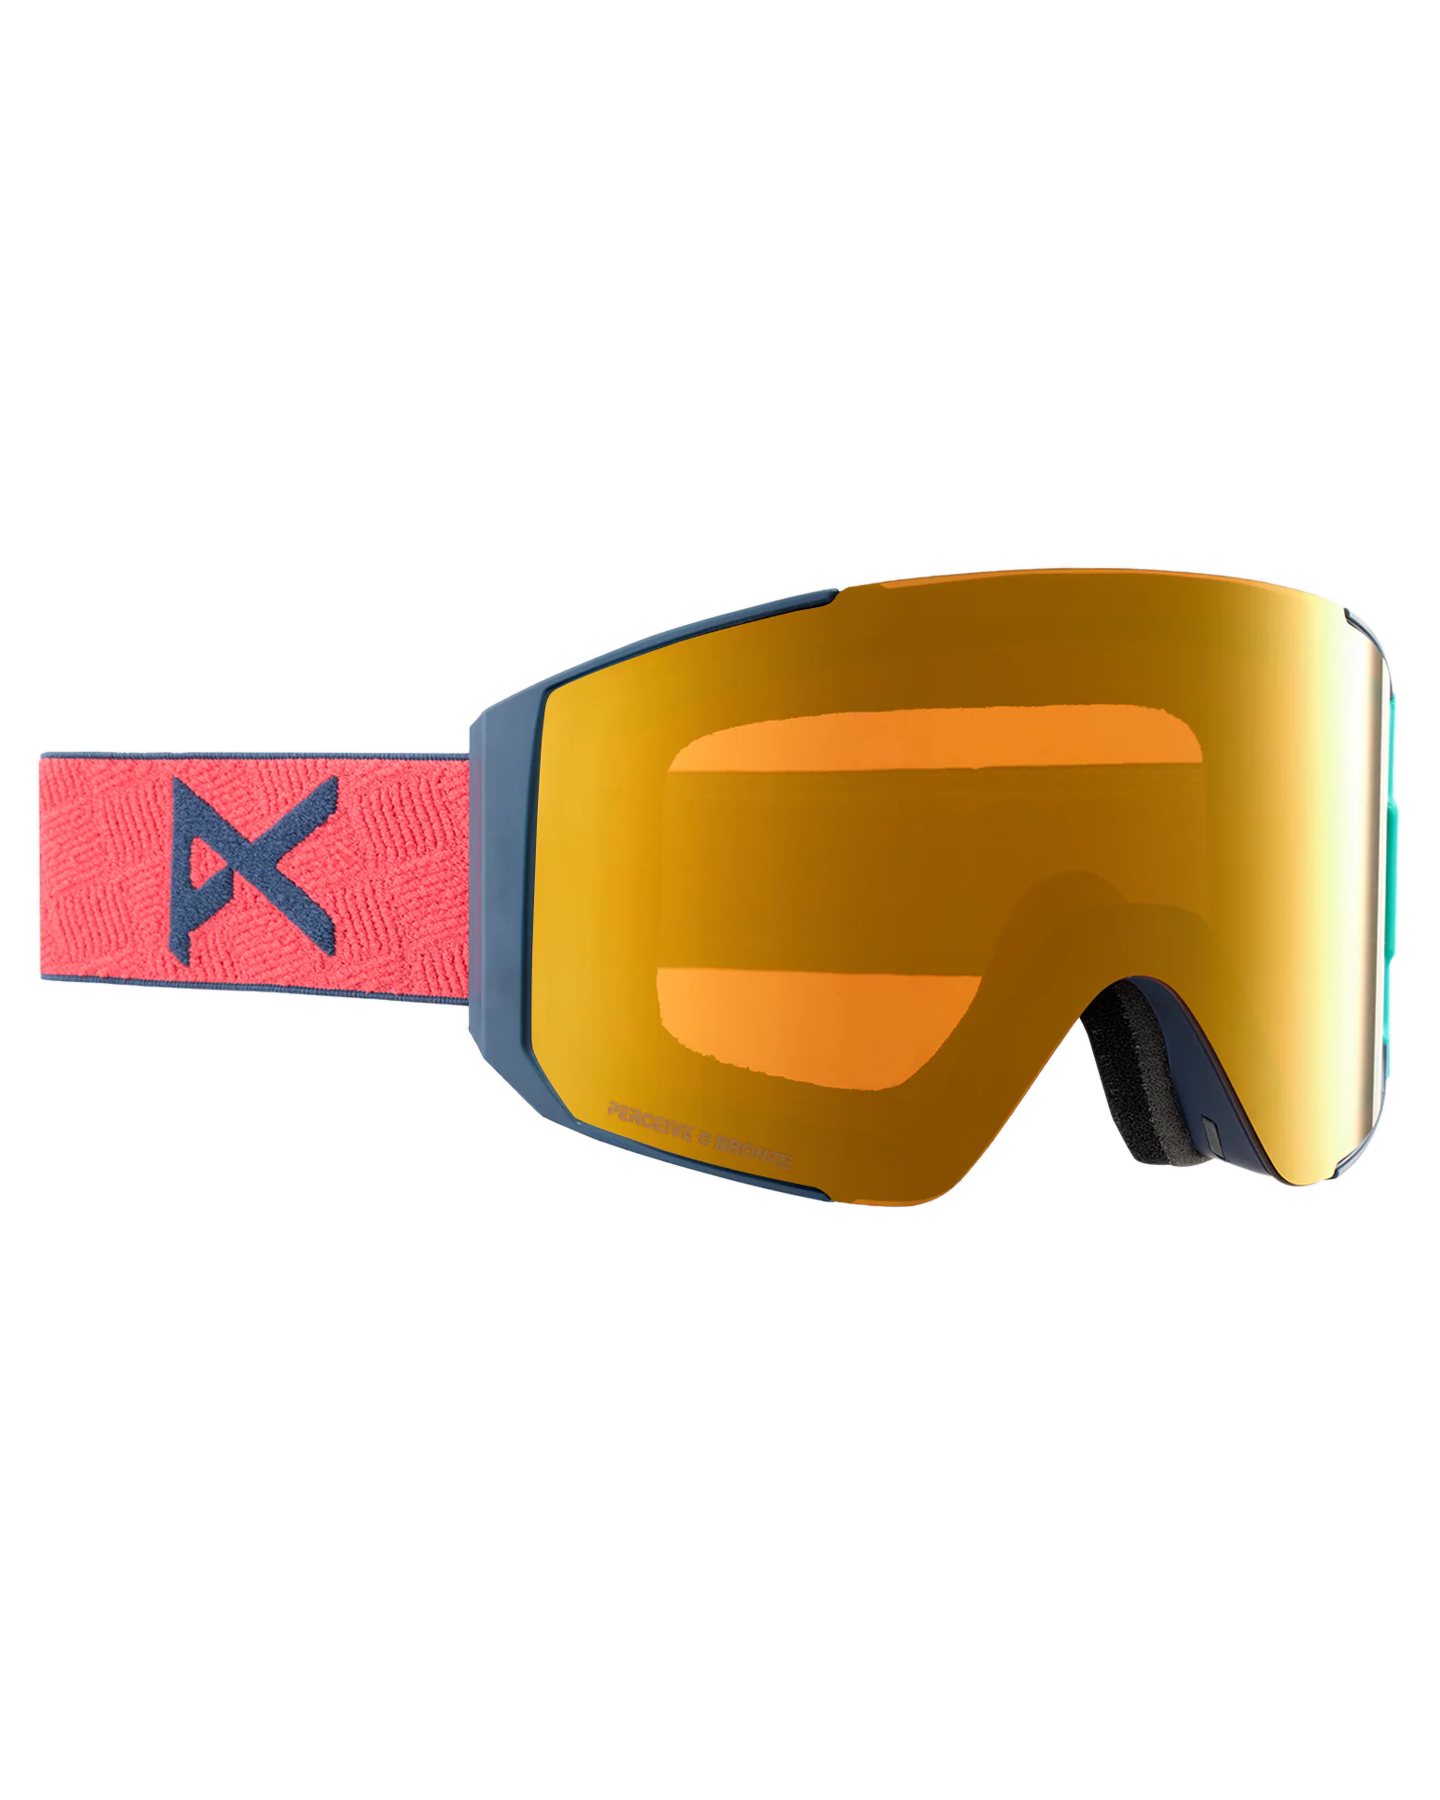 Anon Sync Snow Goggles + Bonus Lens - Coral/Perceive Sunny Bronze Lens Men's Snow Goggles - Trojan Wake Ski Snow